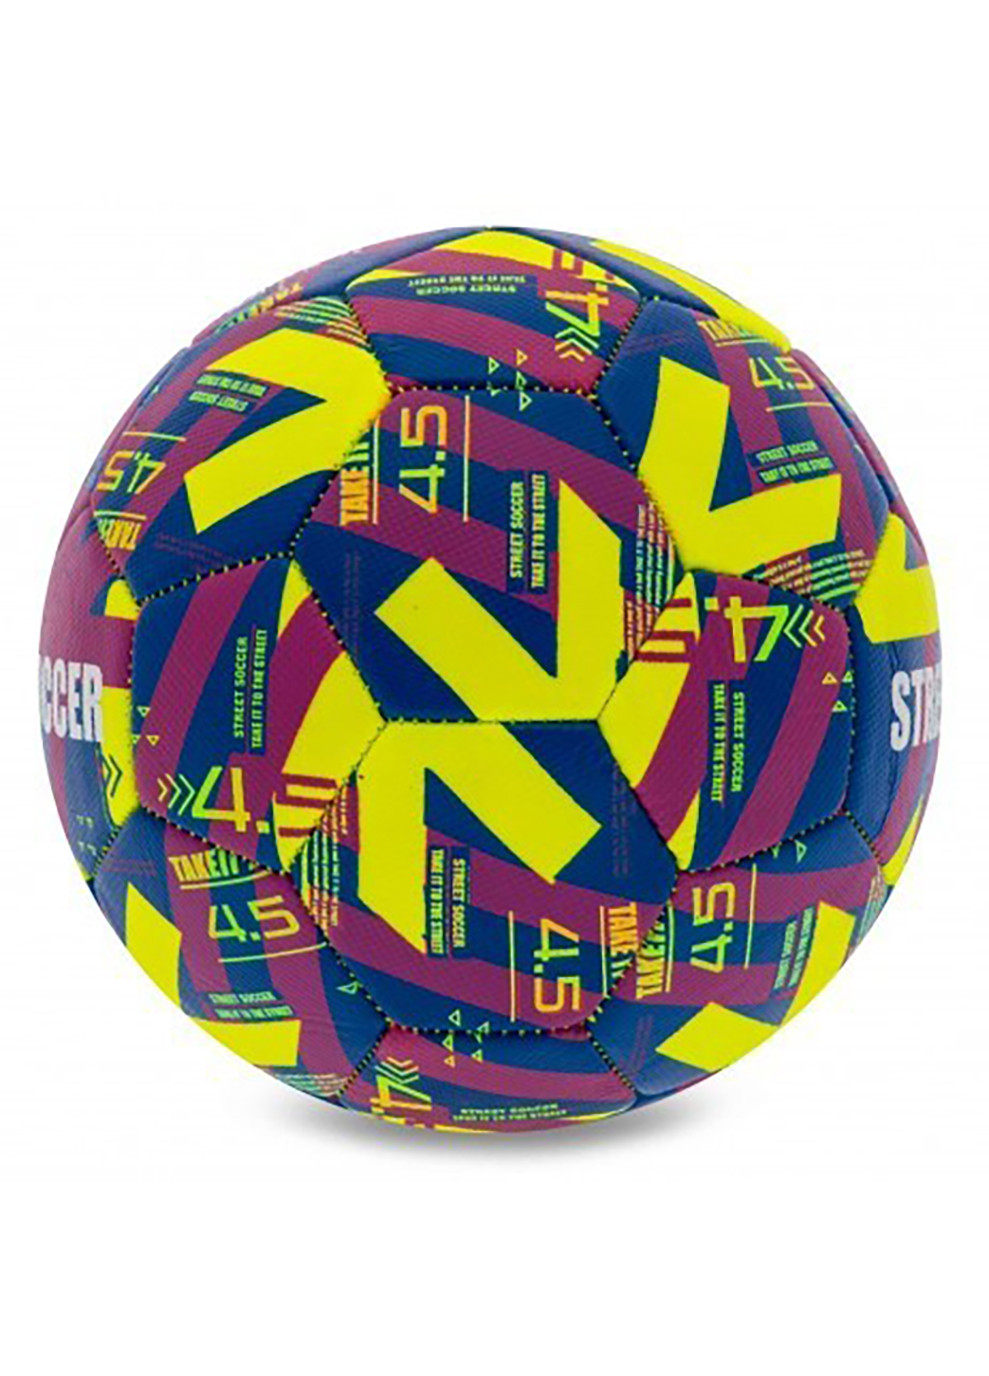 М'яч футбольний вуличний STREET SOCCER v23 жовтий Select (260634128)